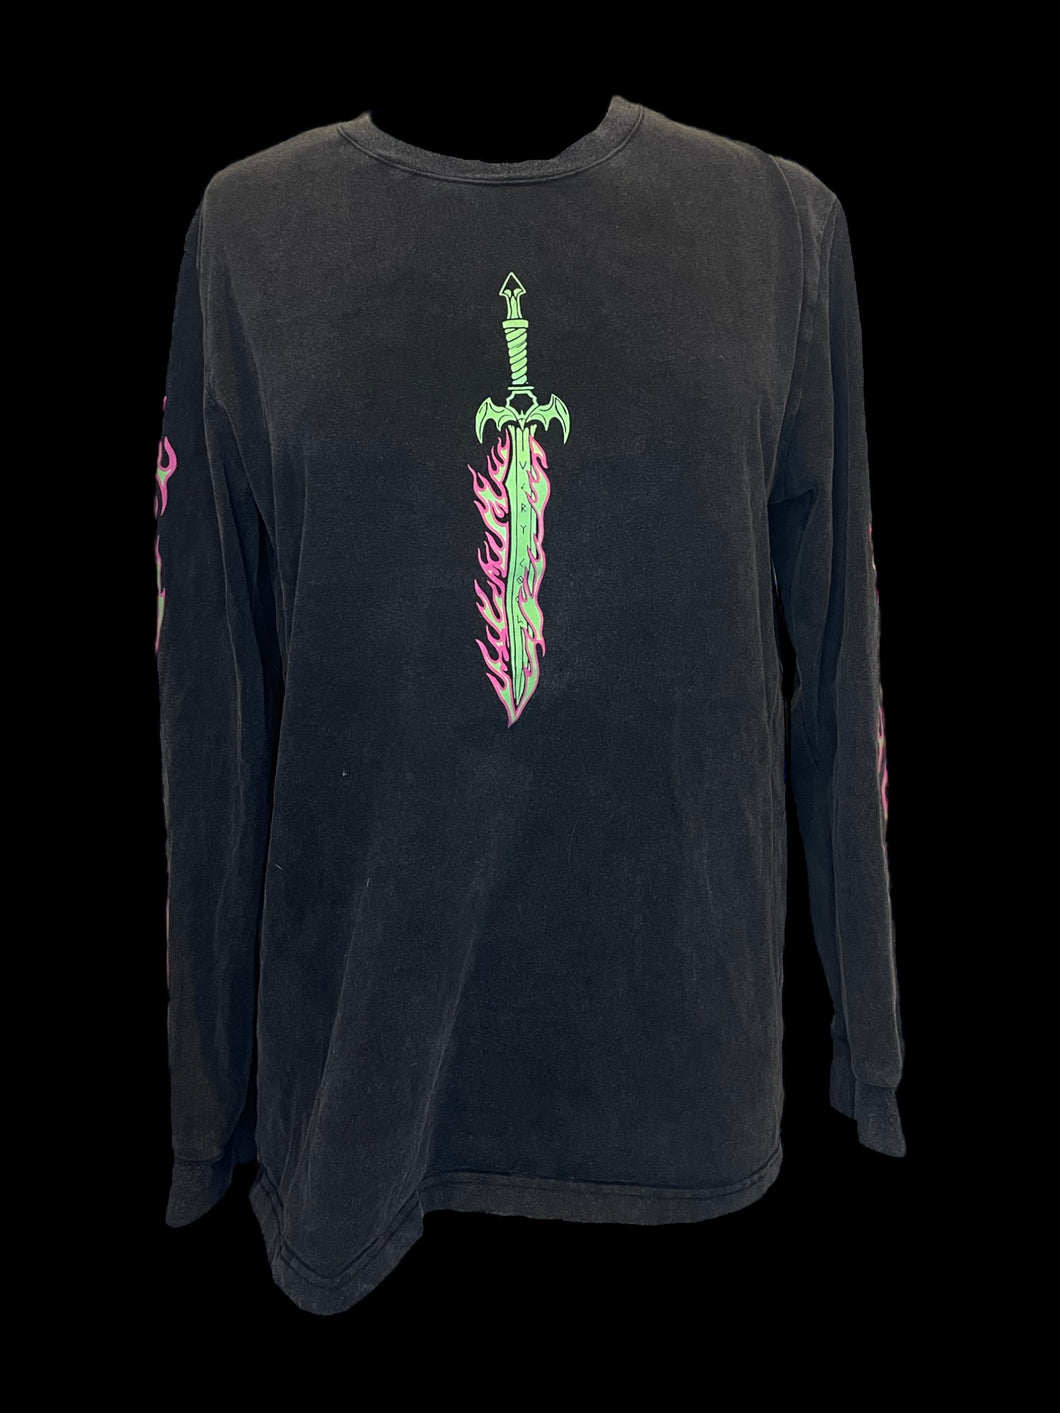 0X Black long sleeve crew neck cotton top w/ neon flaming sword & horned skull graphics